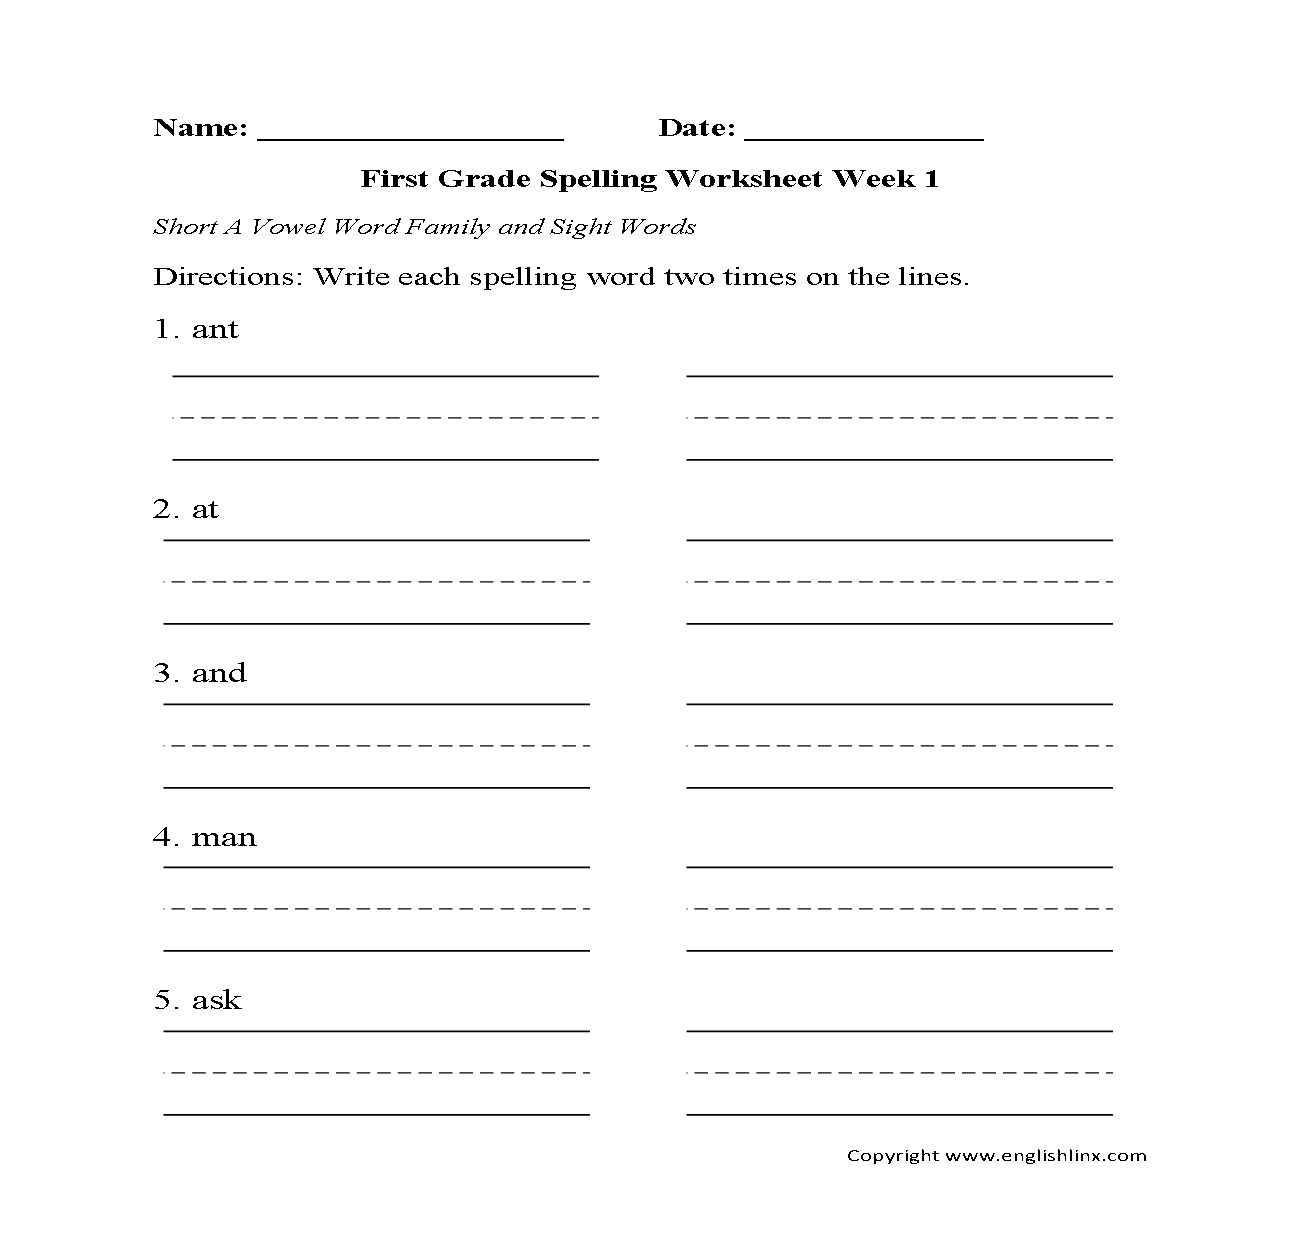 Spelling Worksheets  First Grade Spelling Worksheets Intended For Spelling Worksheets For Grade 1